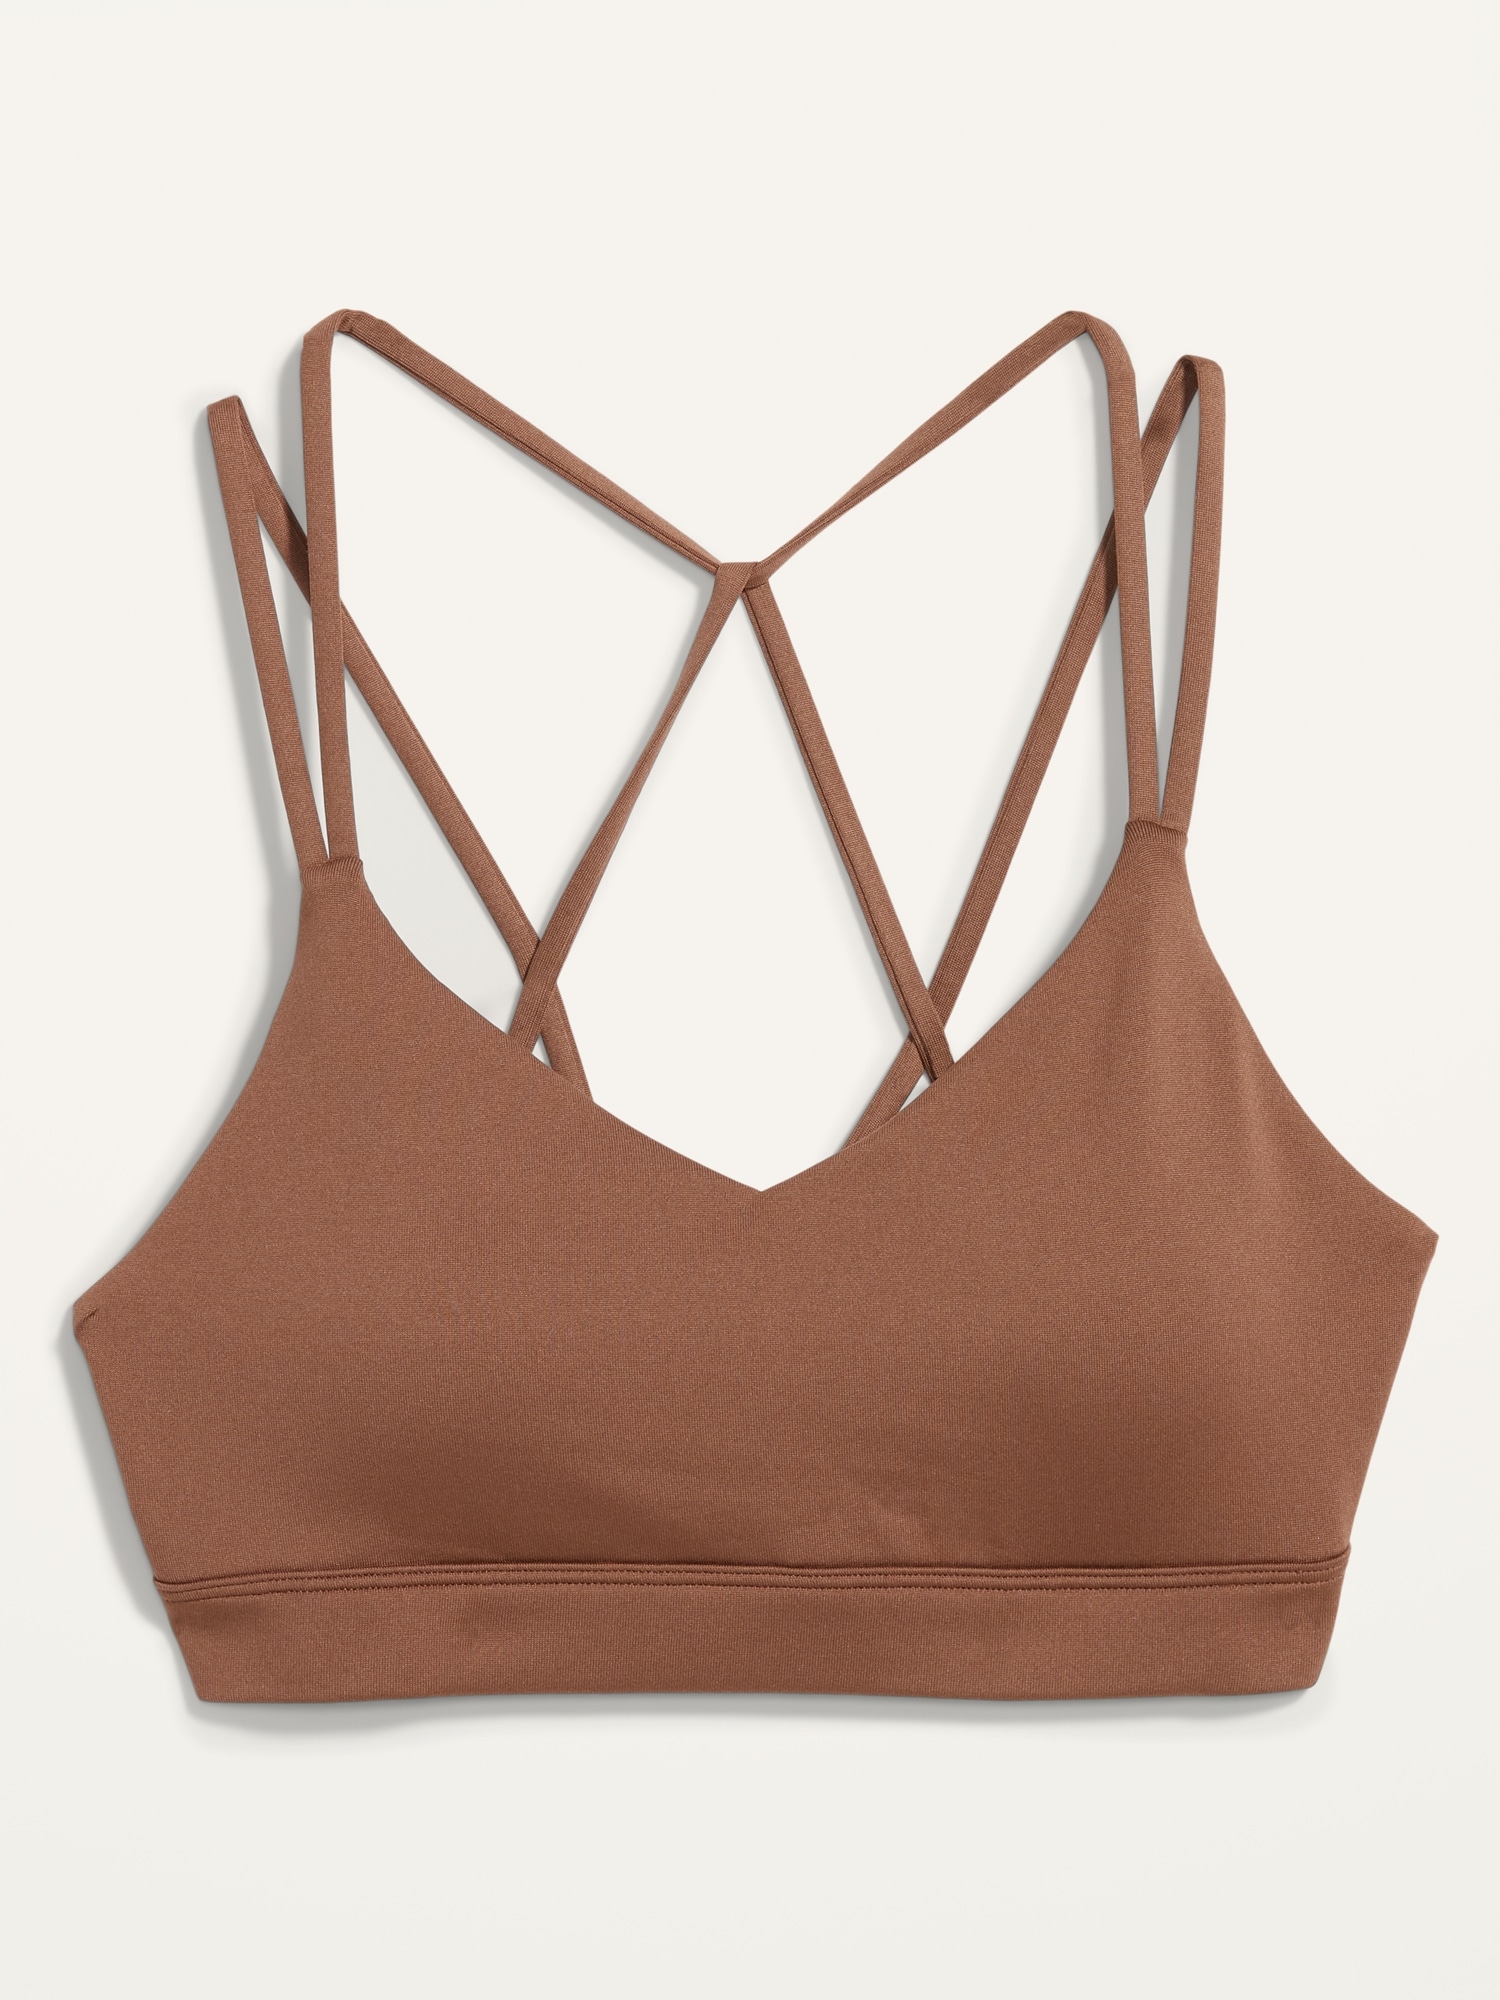 TALA Solasta medium support strappy sports bra in brown